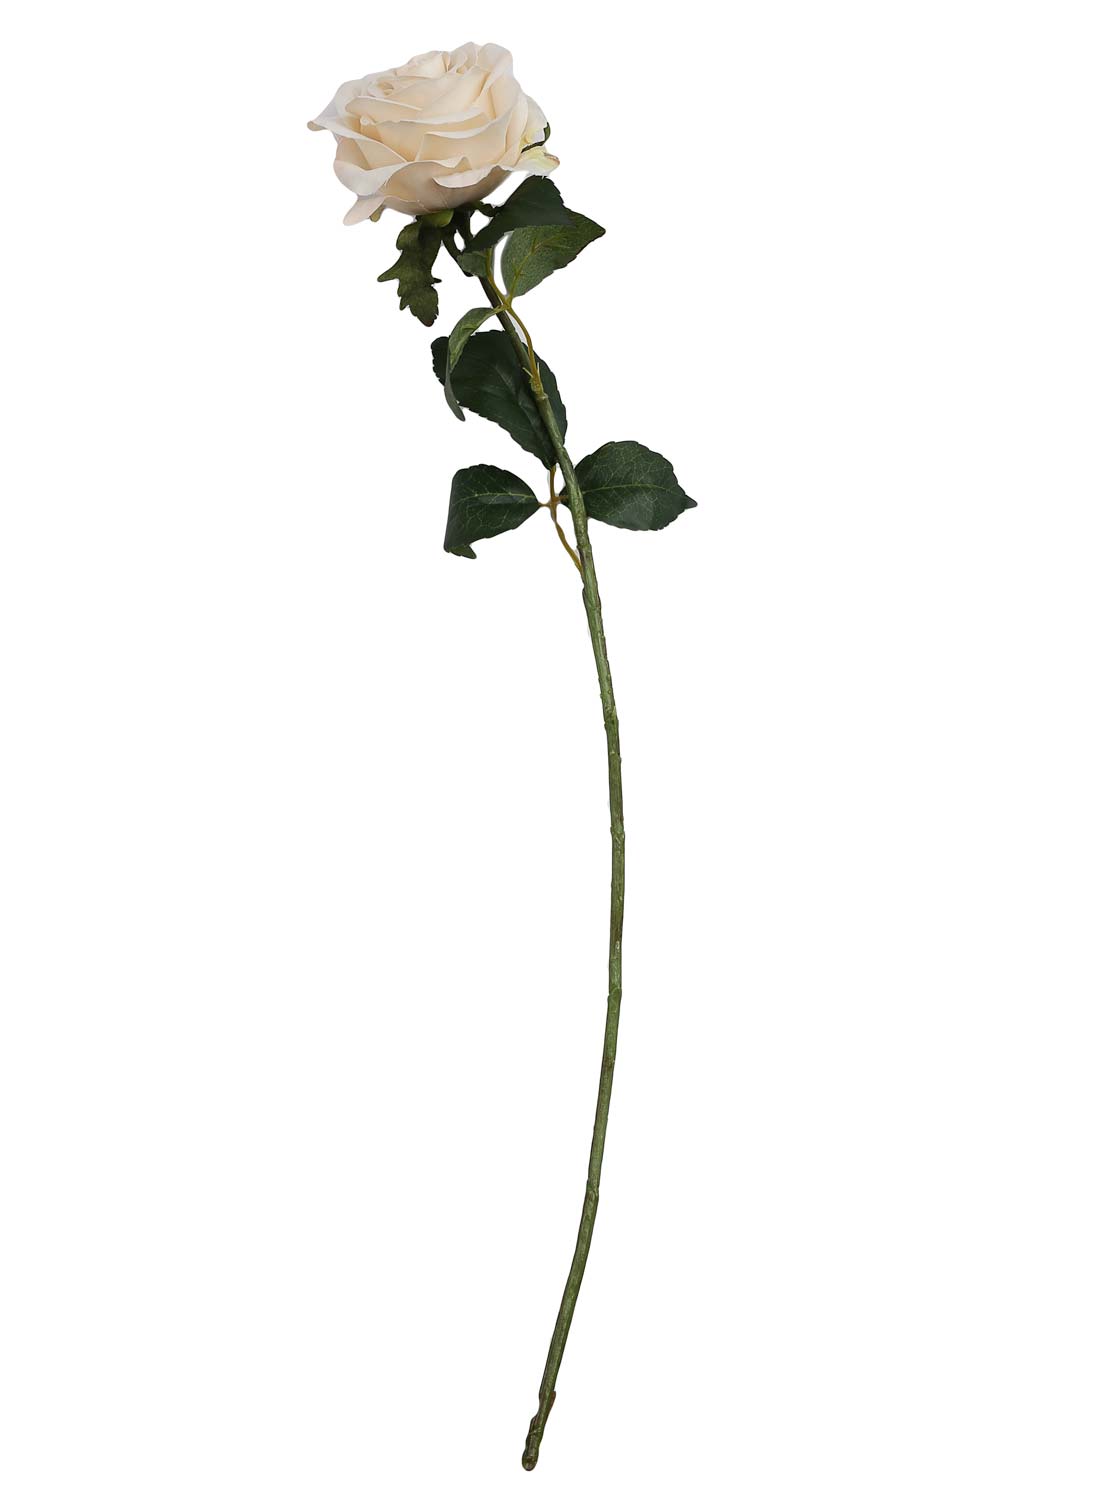 Rose stem with IVS 54